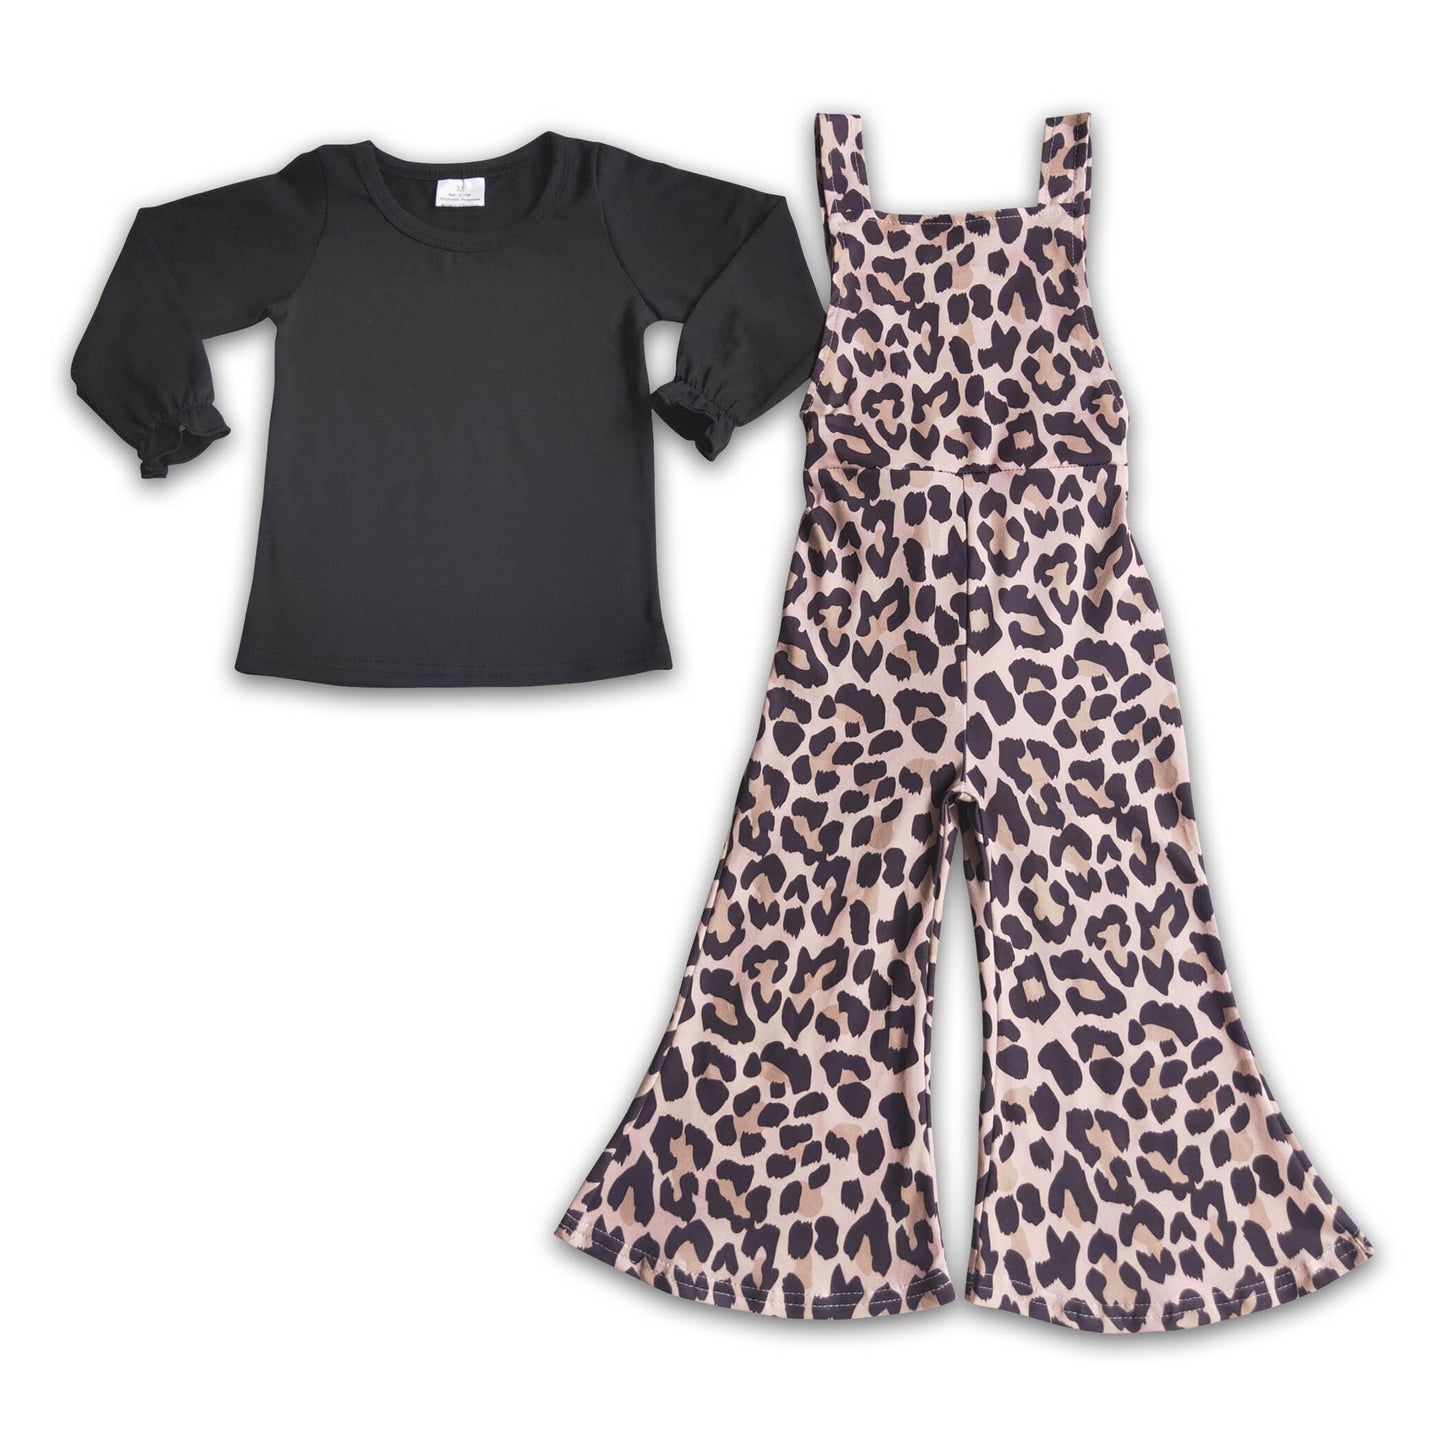 Black cotton shirt leopard print overalls girls clothing